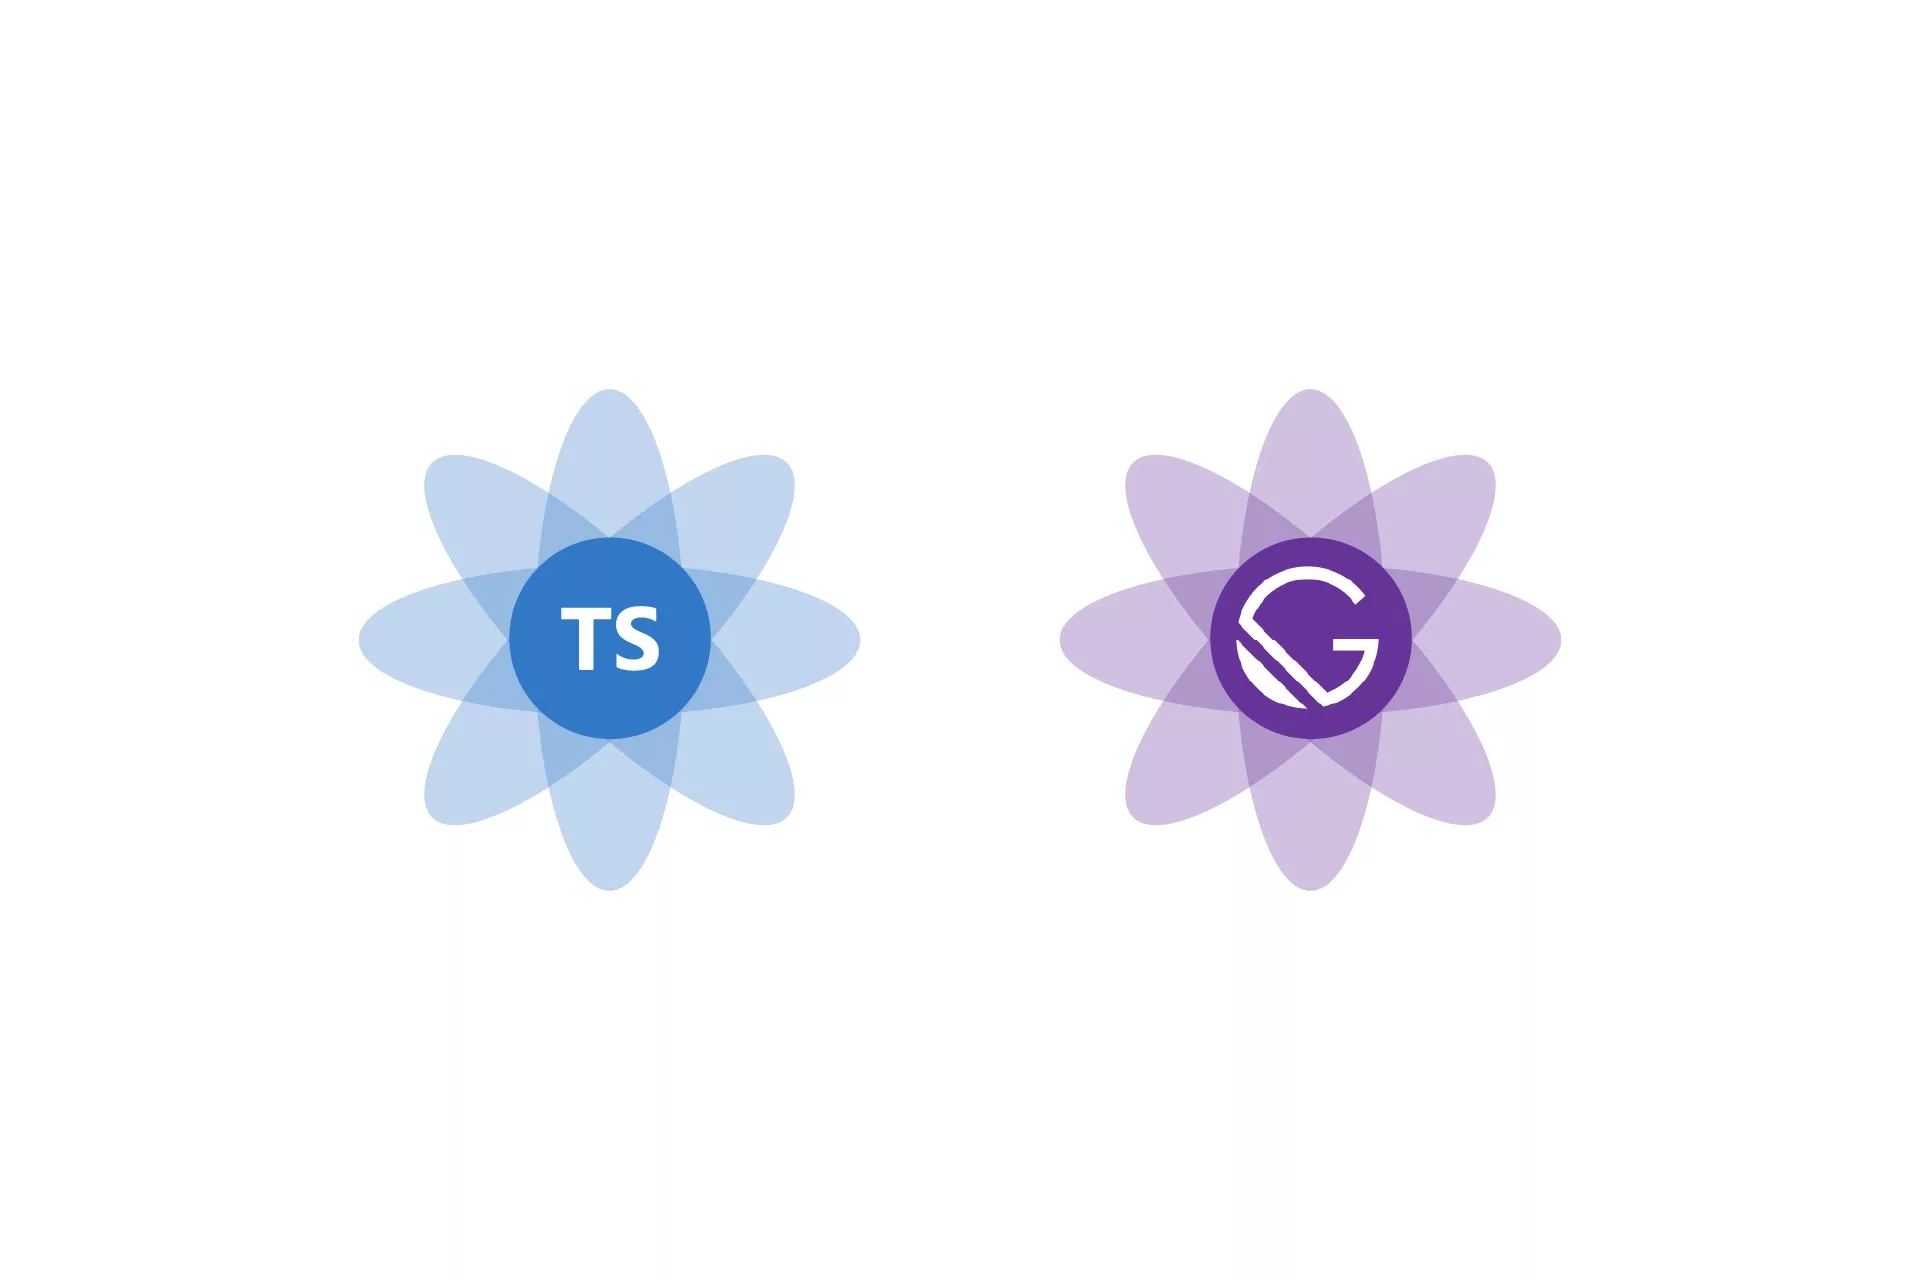 A flower that symbolizes Typescript next to a flower that symbolizes GatsbyJS